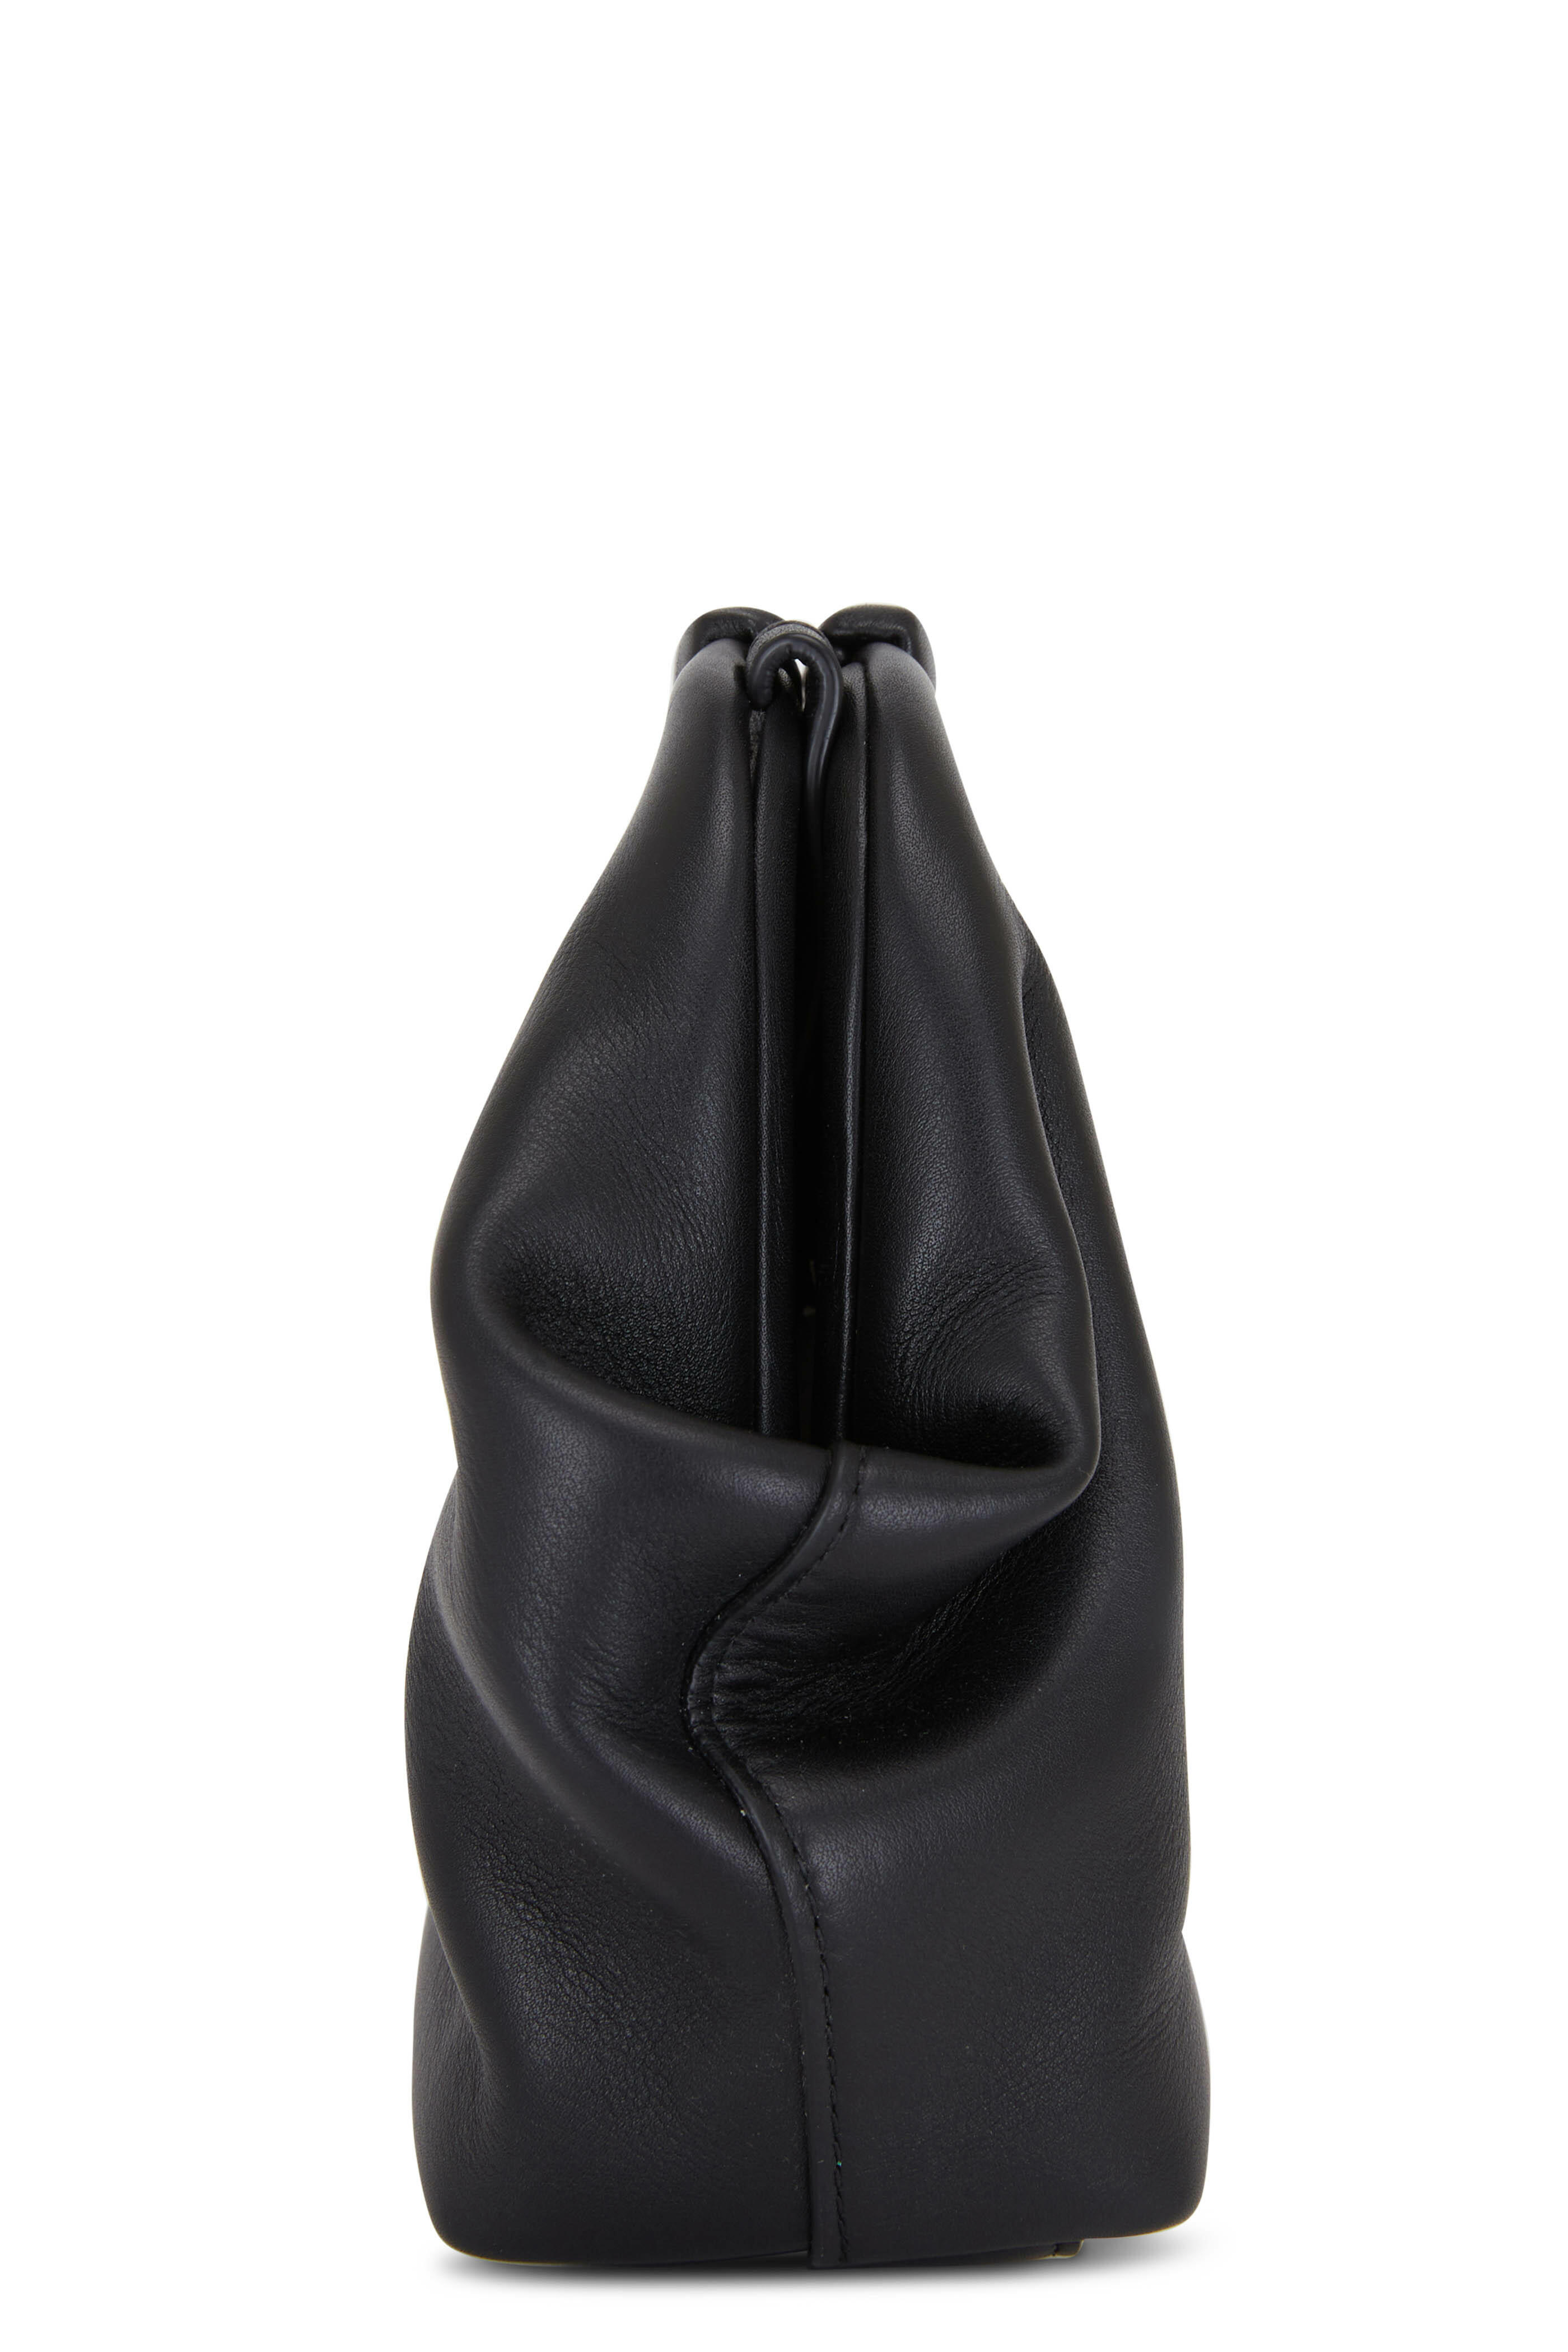 BOTTEGA VENETA Point Small Leather Bag in Black